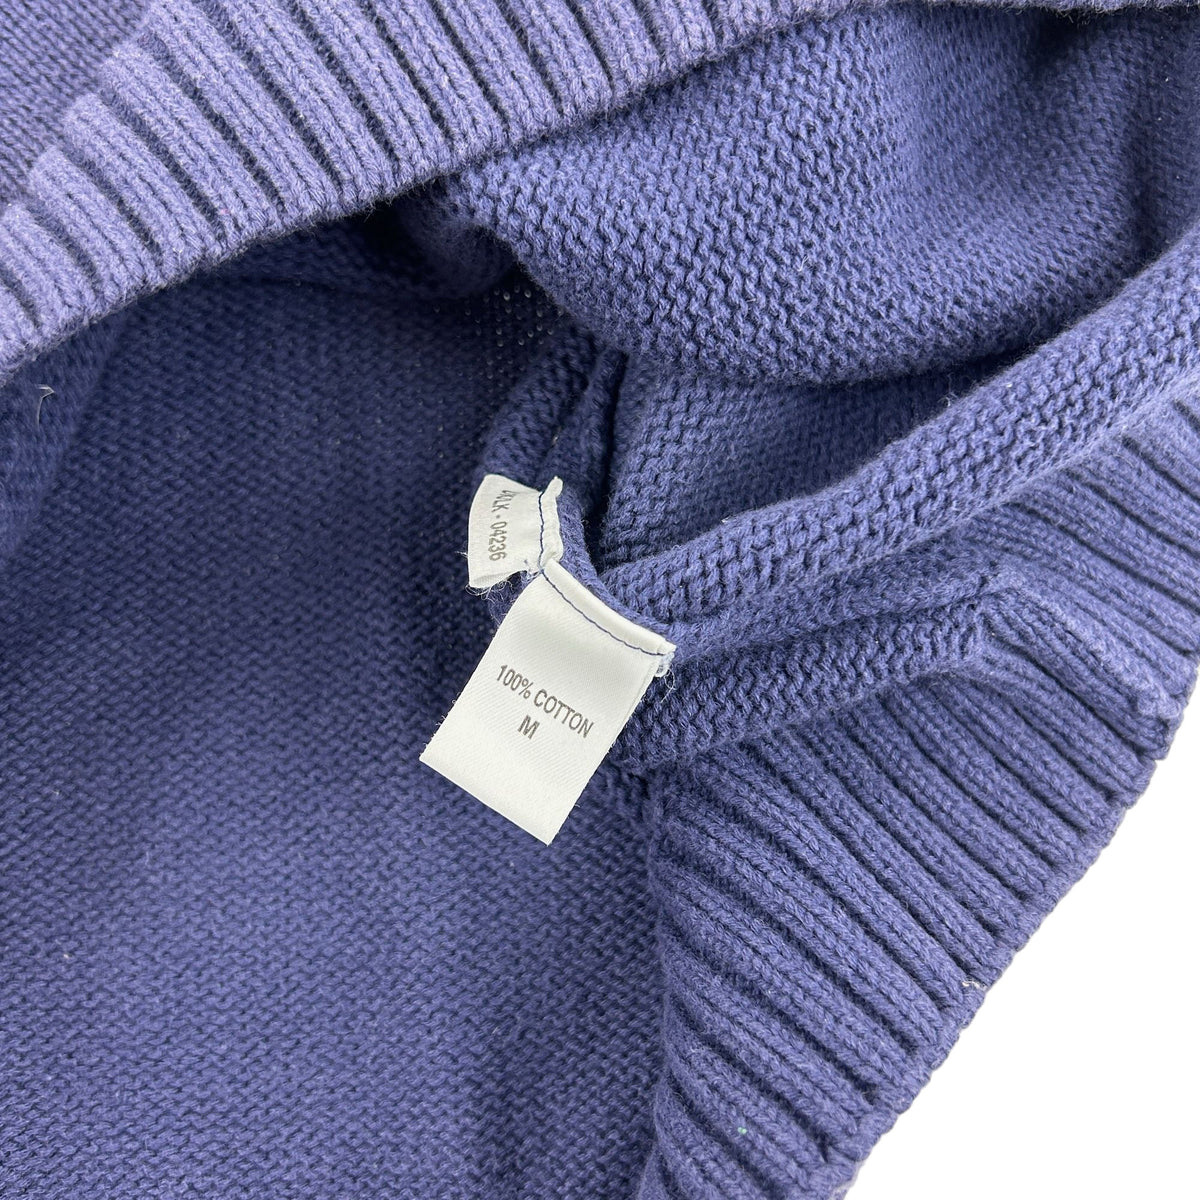 Vintage Yves Saint Laurent Logo Knit Jumper Size S